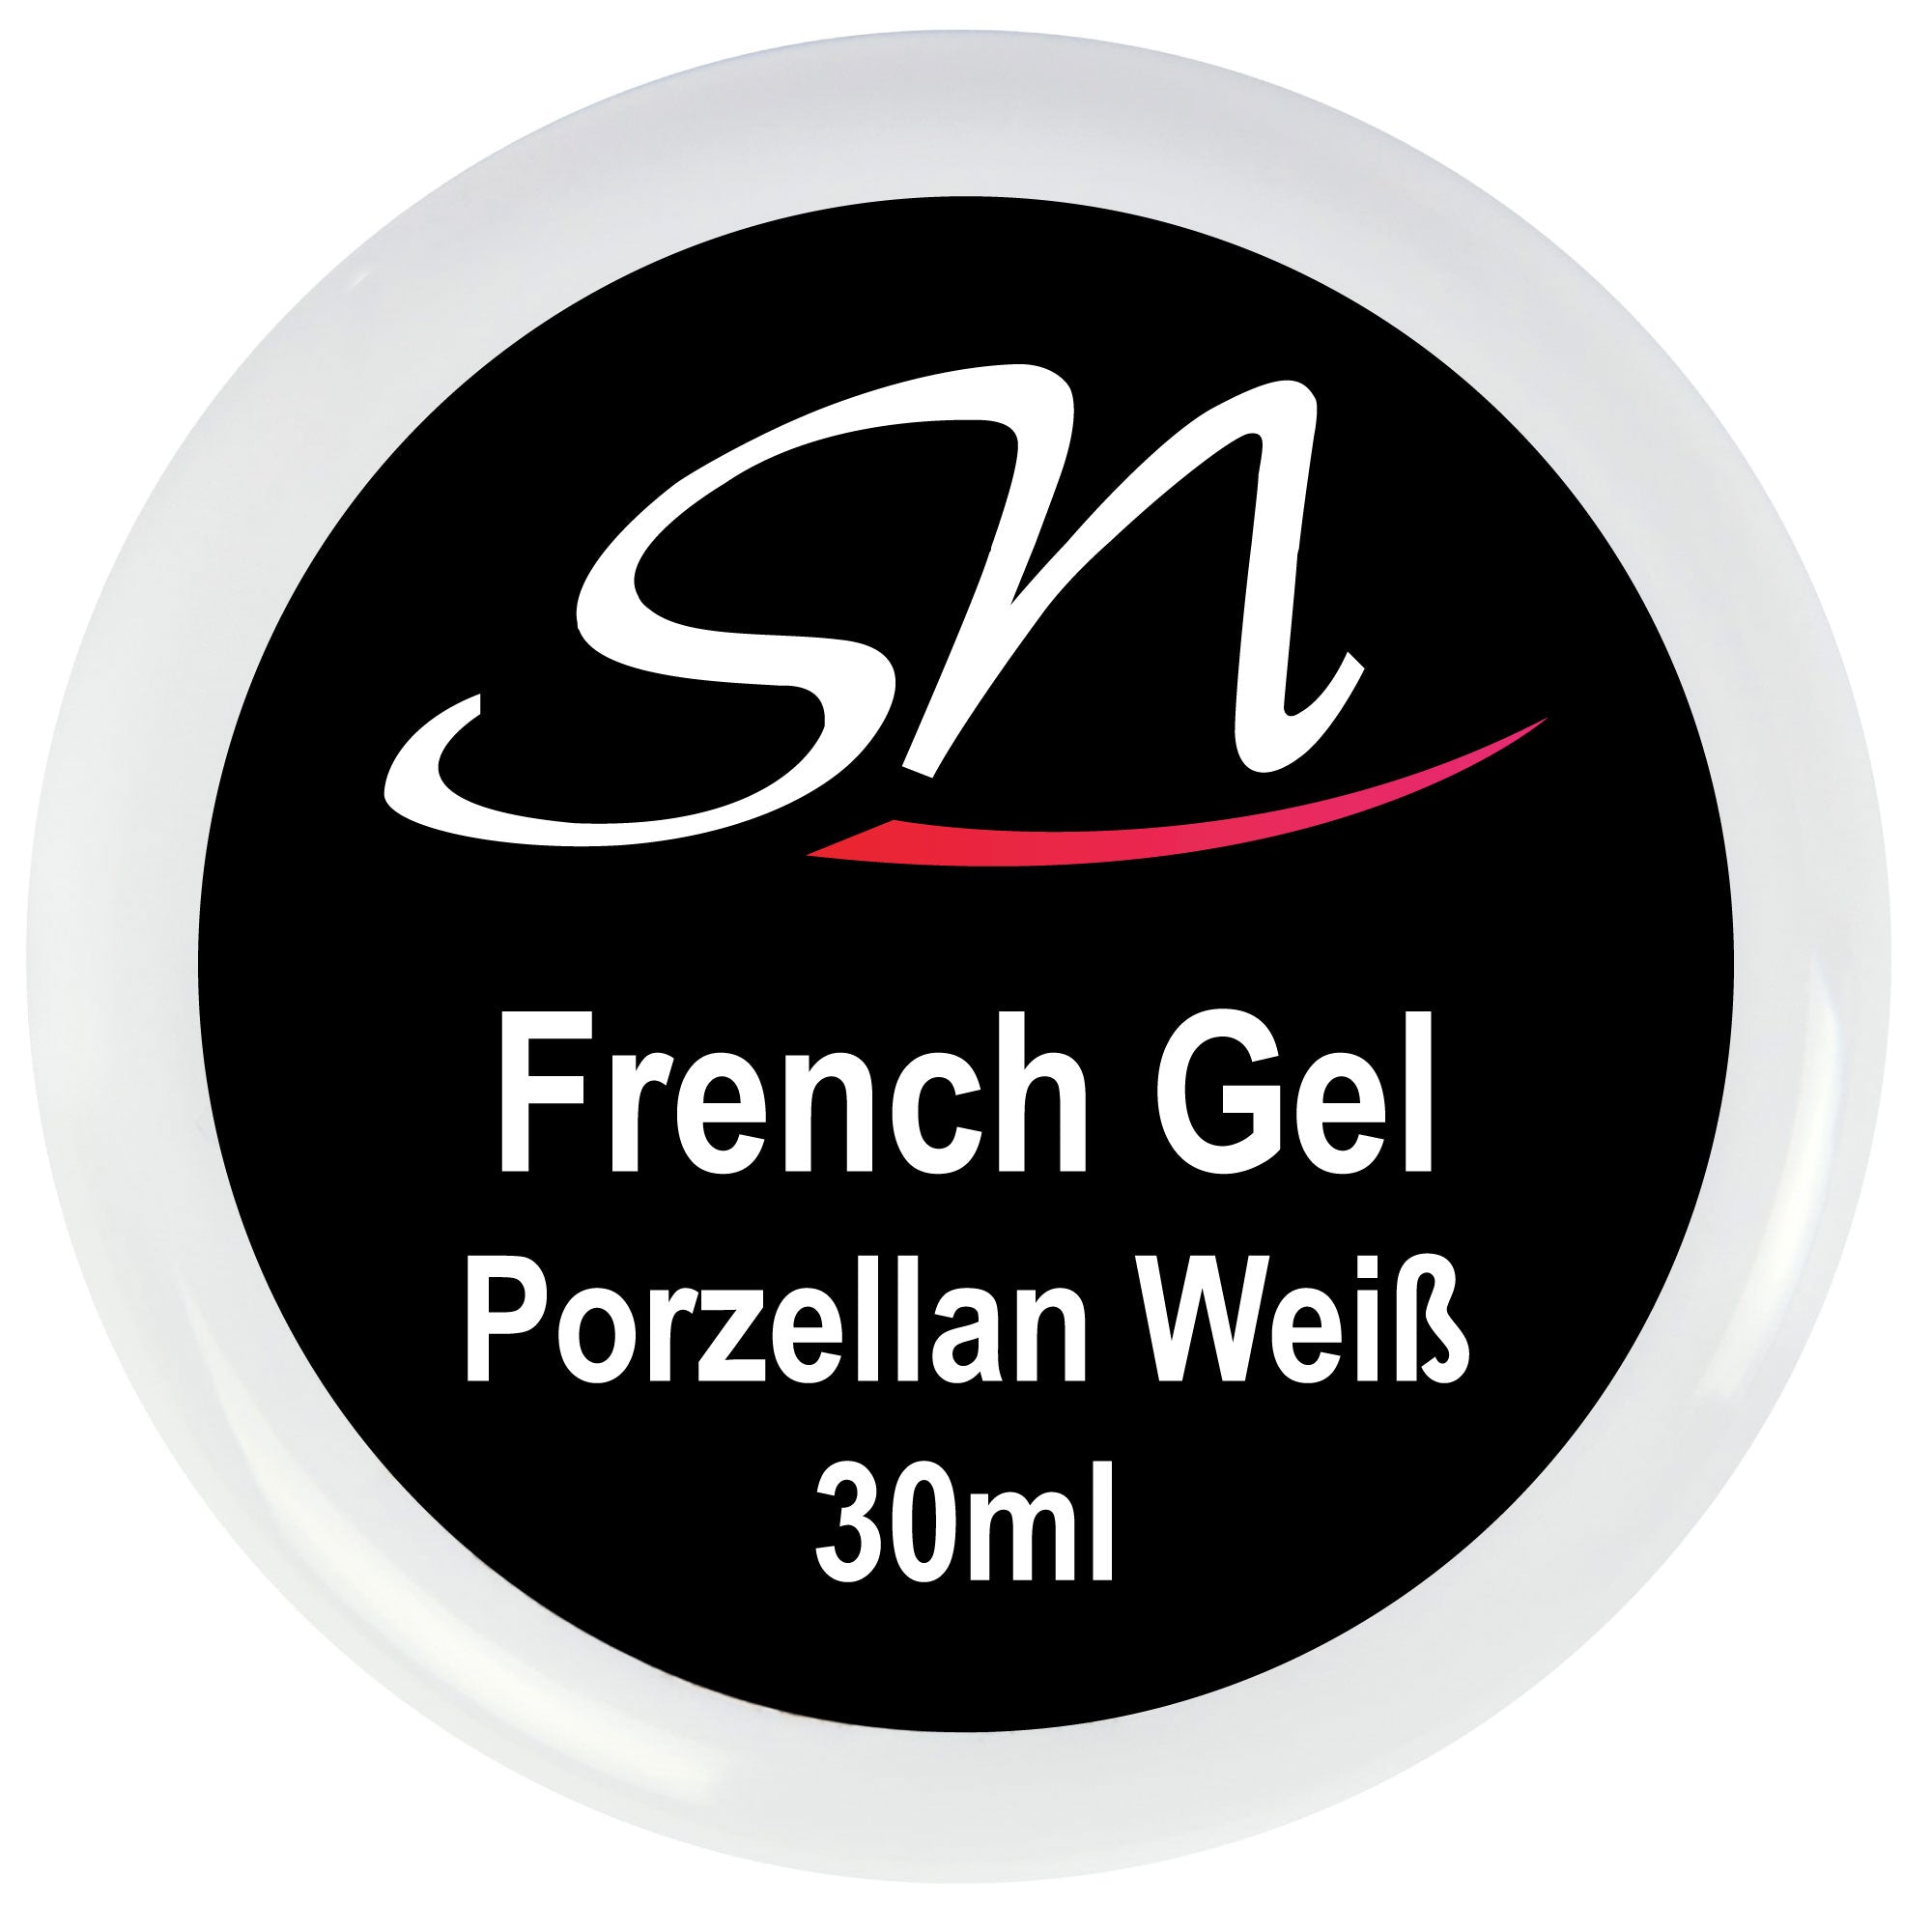 SN French Gel Porzellan weiss 30ml